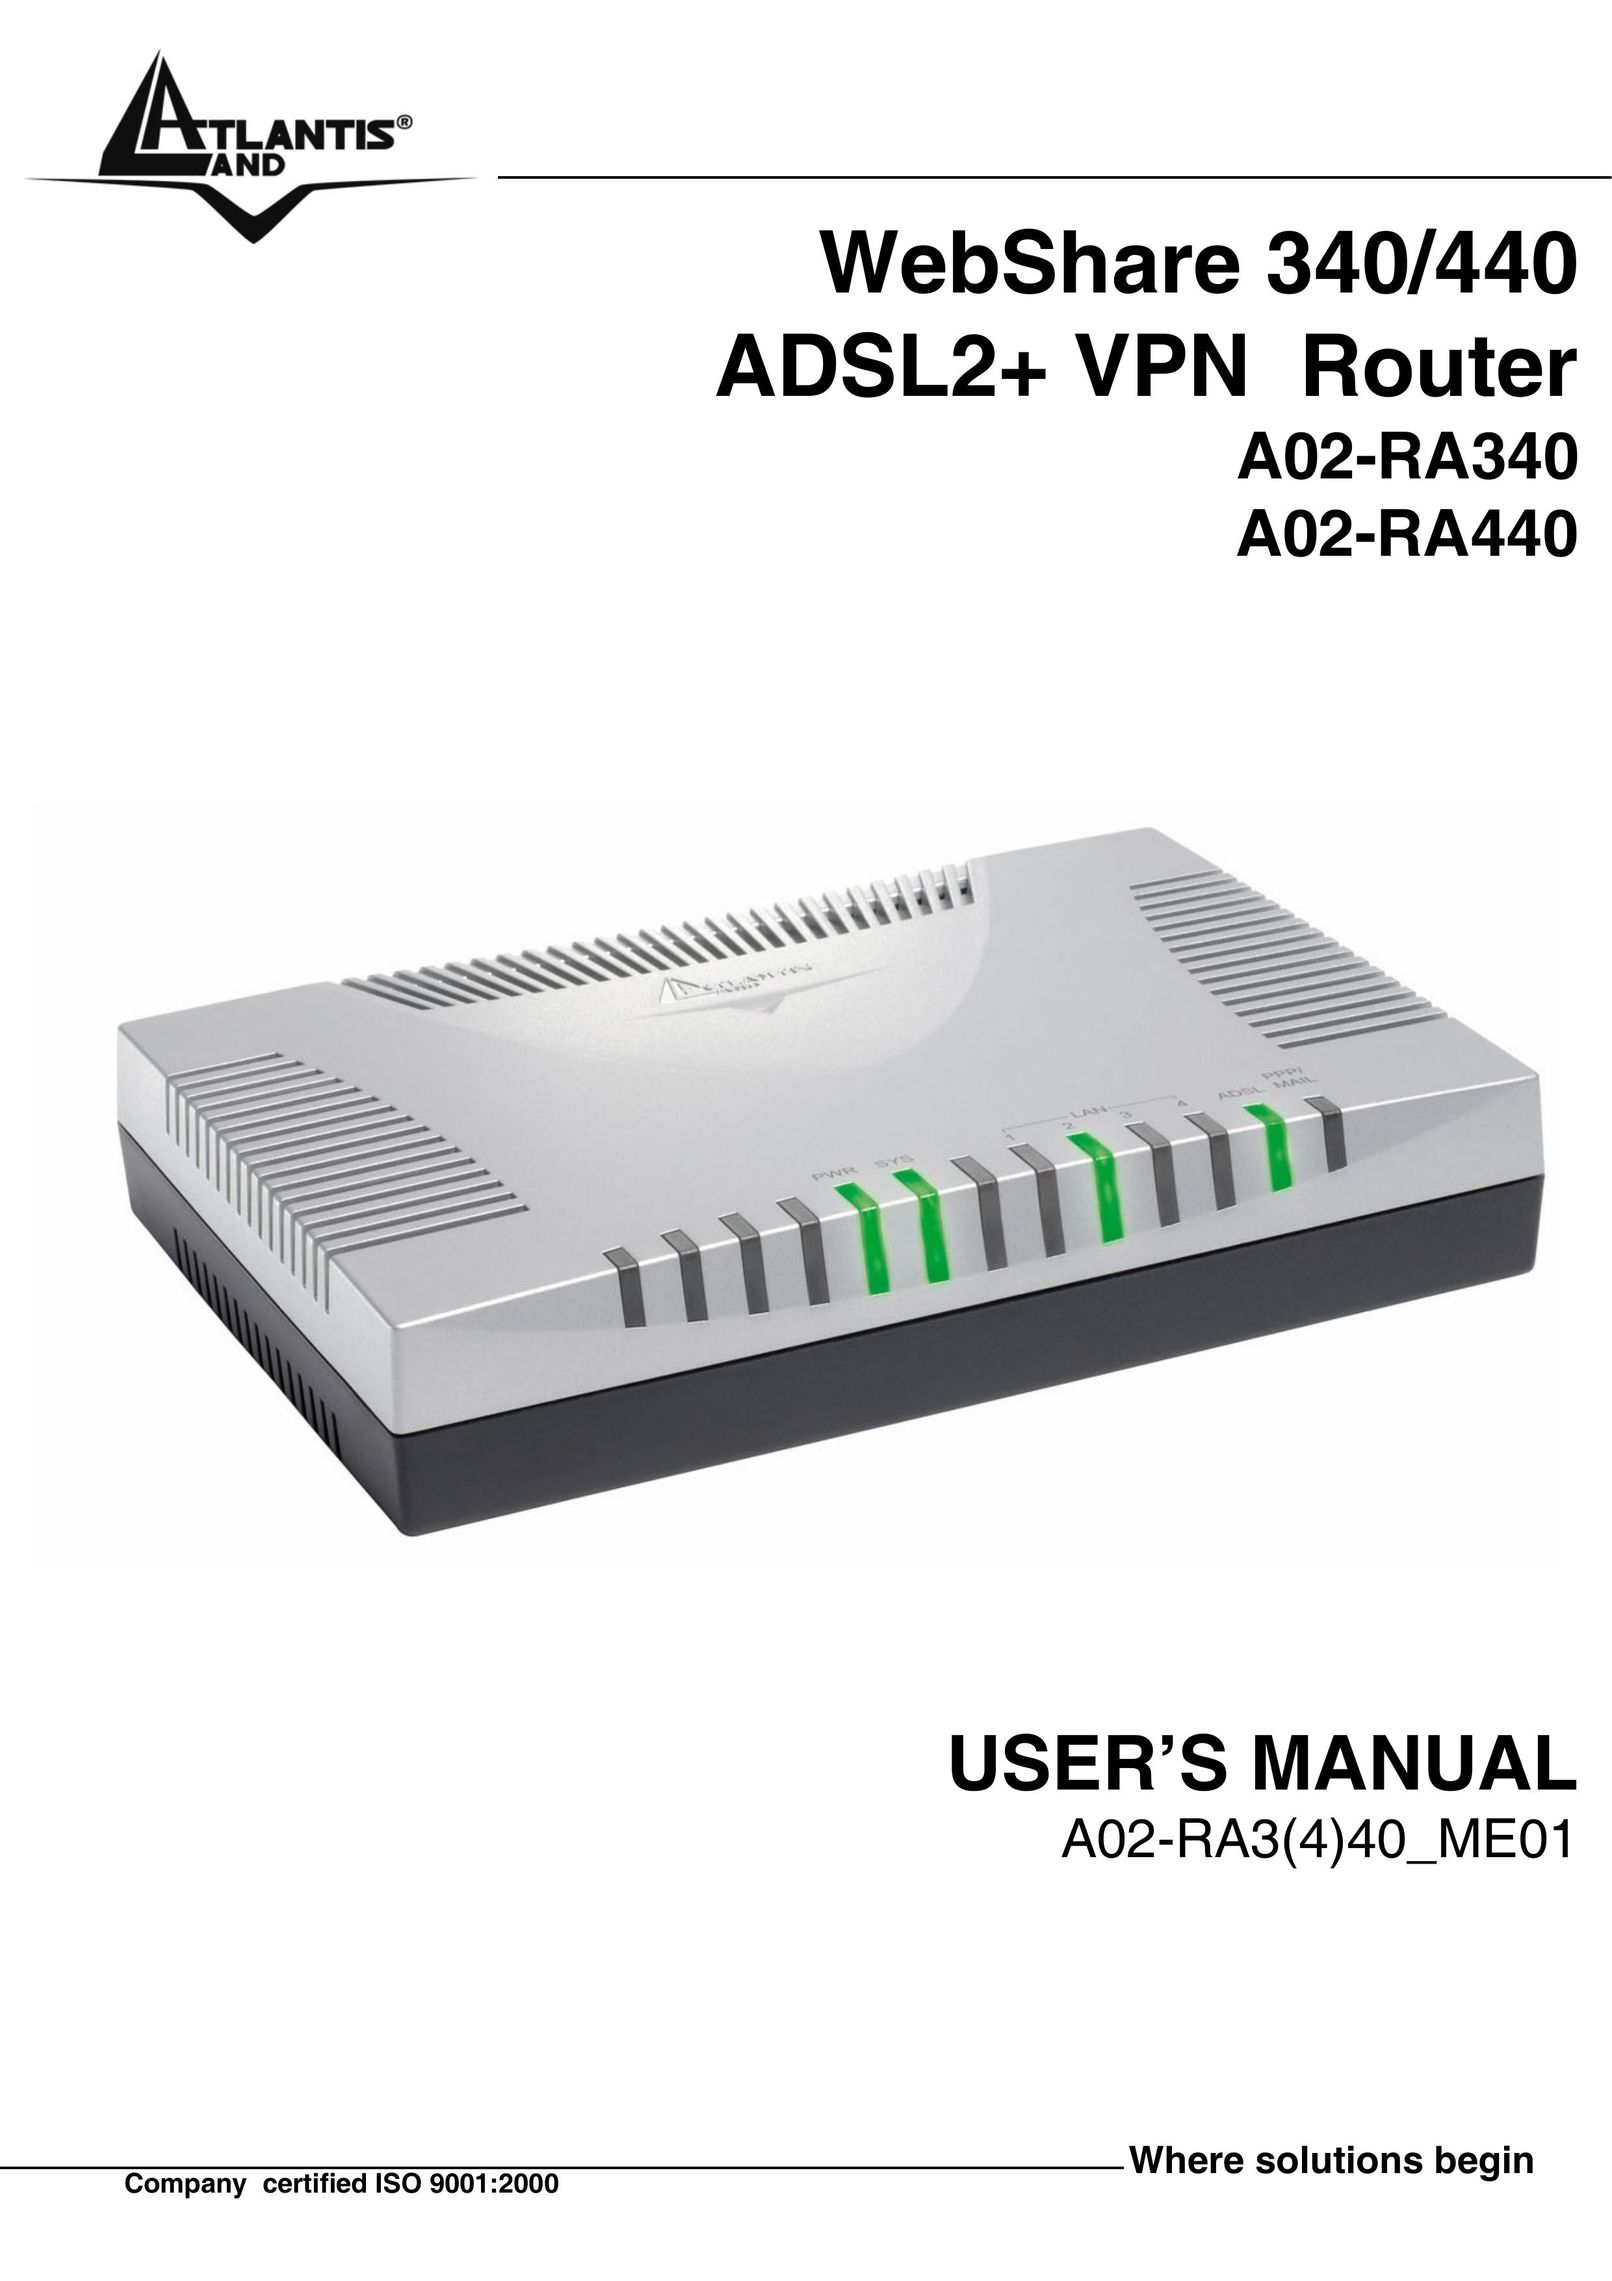 Atlantis Land A02-RA440 Network Router User Manual